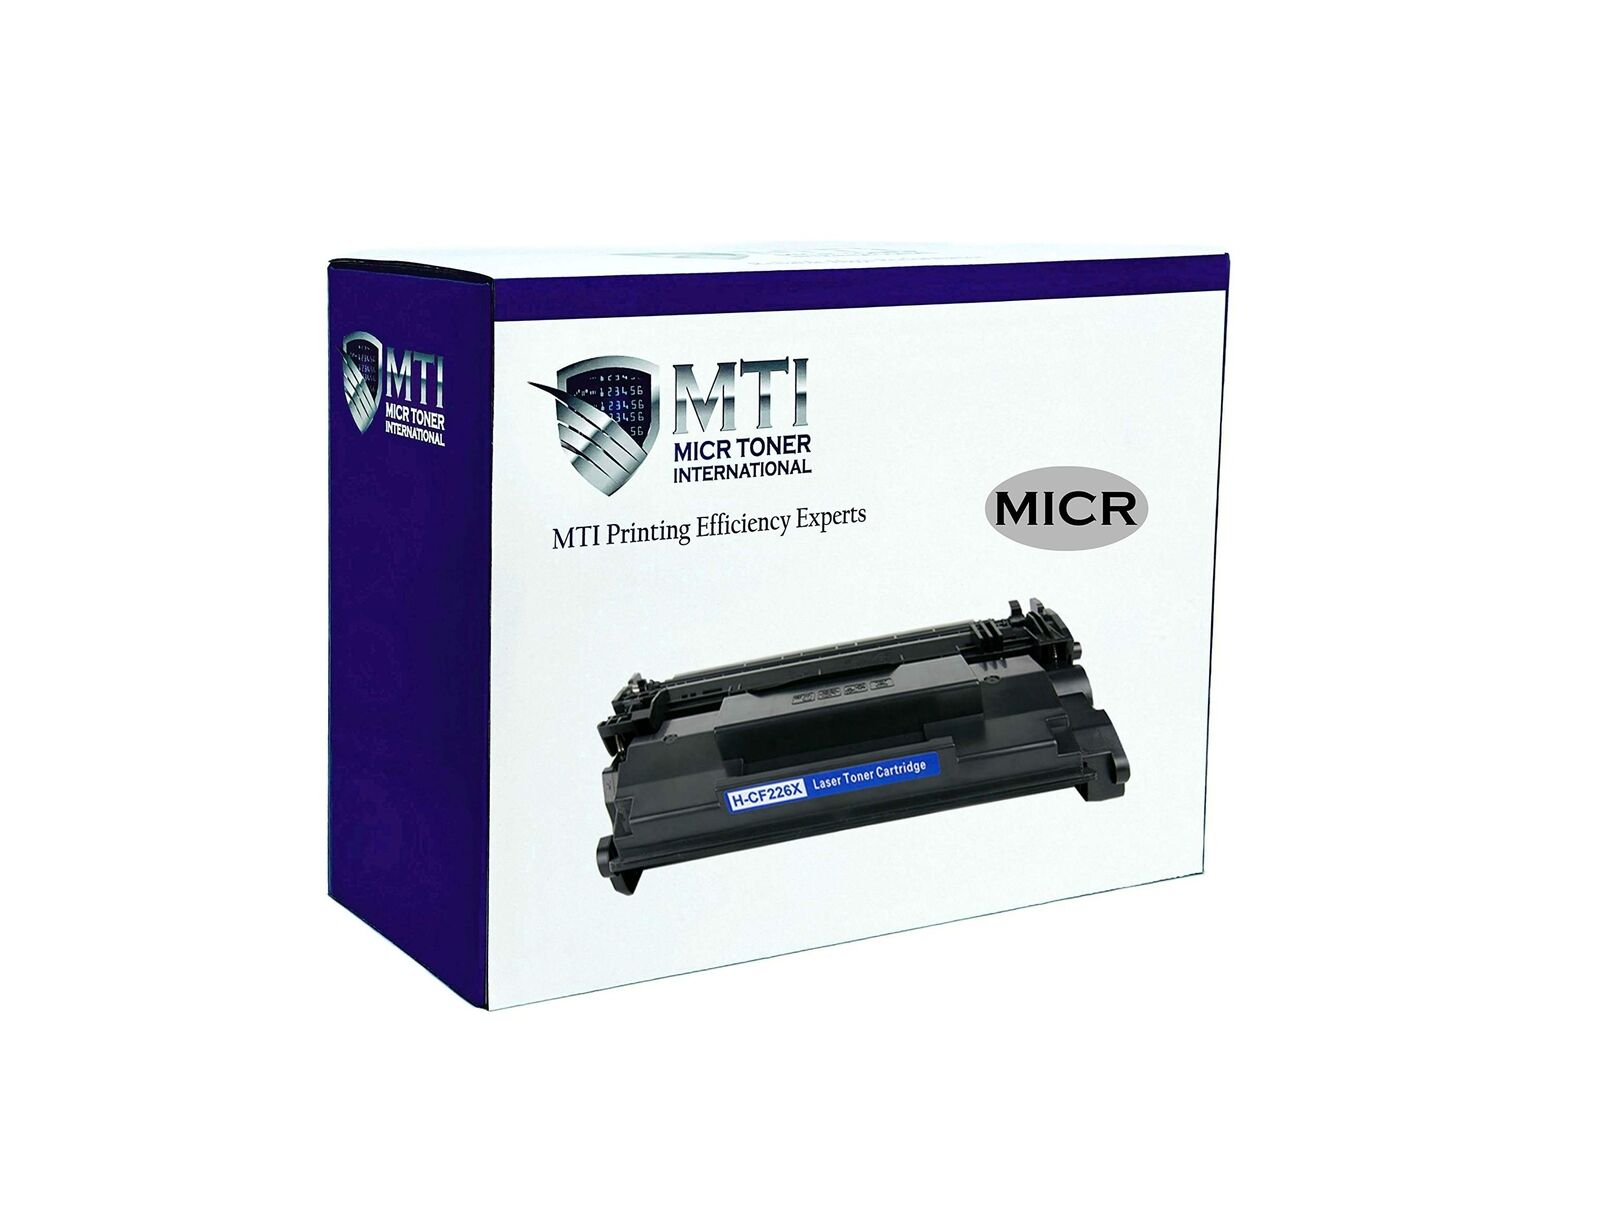 MICR Toner International Compatible High Yield MICR Toner Cartridge Replaceme...